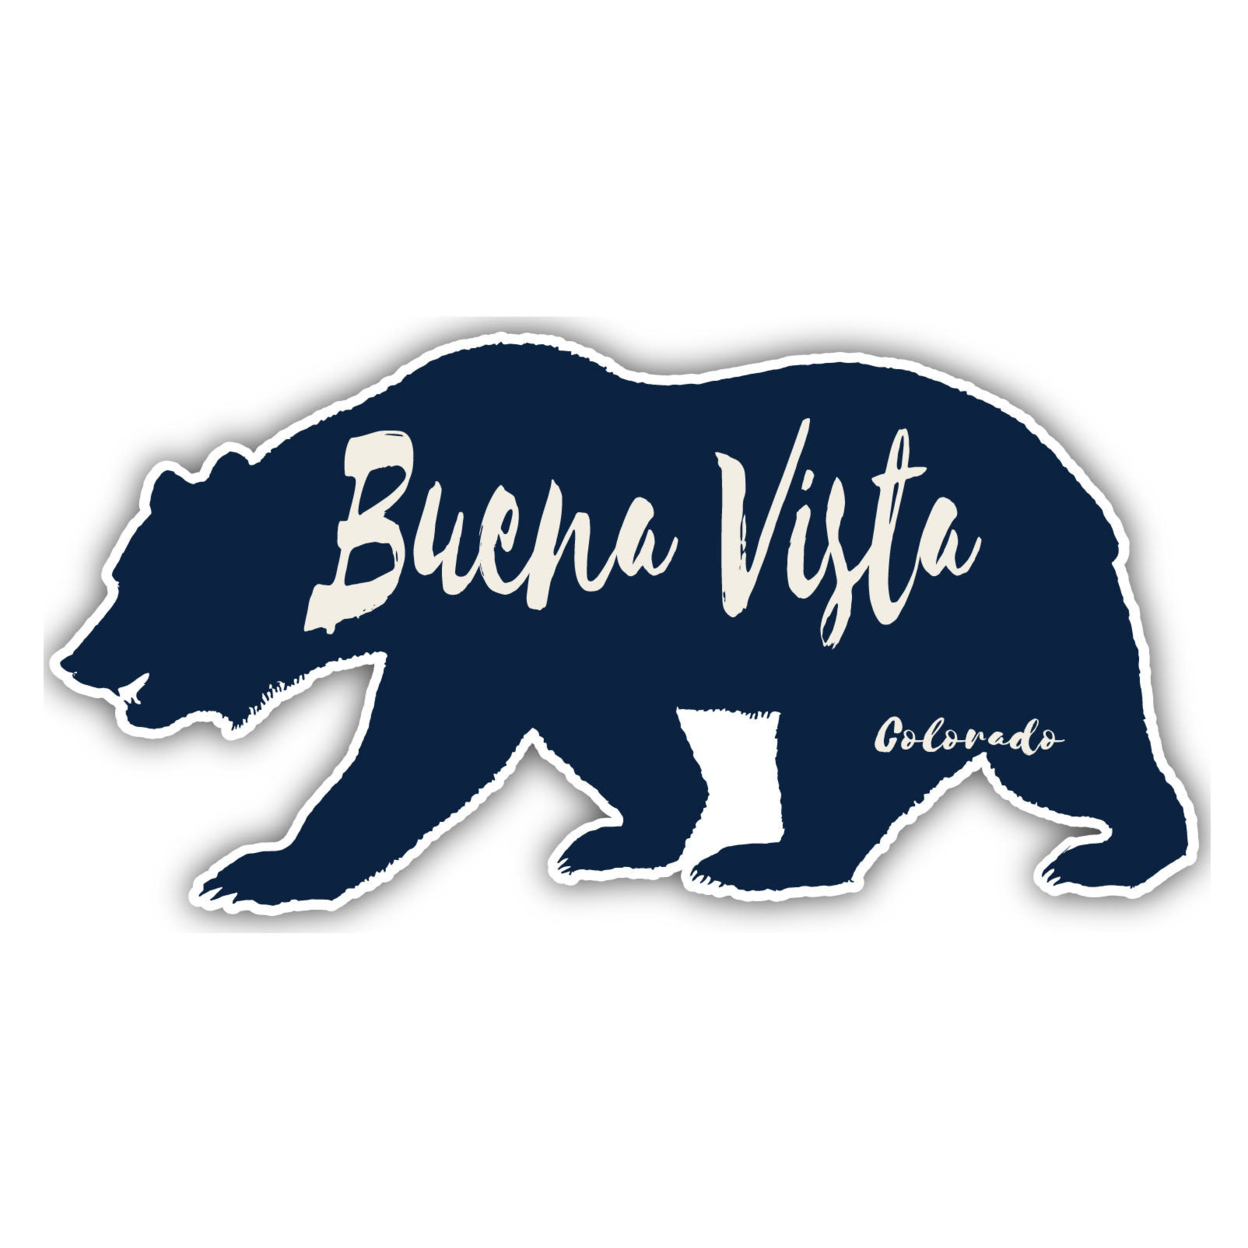 Buena Vista Colorado Souvenir Decorative Stickers (Choose Theme And Size) - Single Unit, 4-Inch, Bear